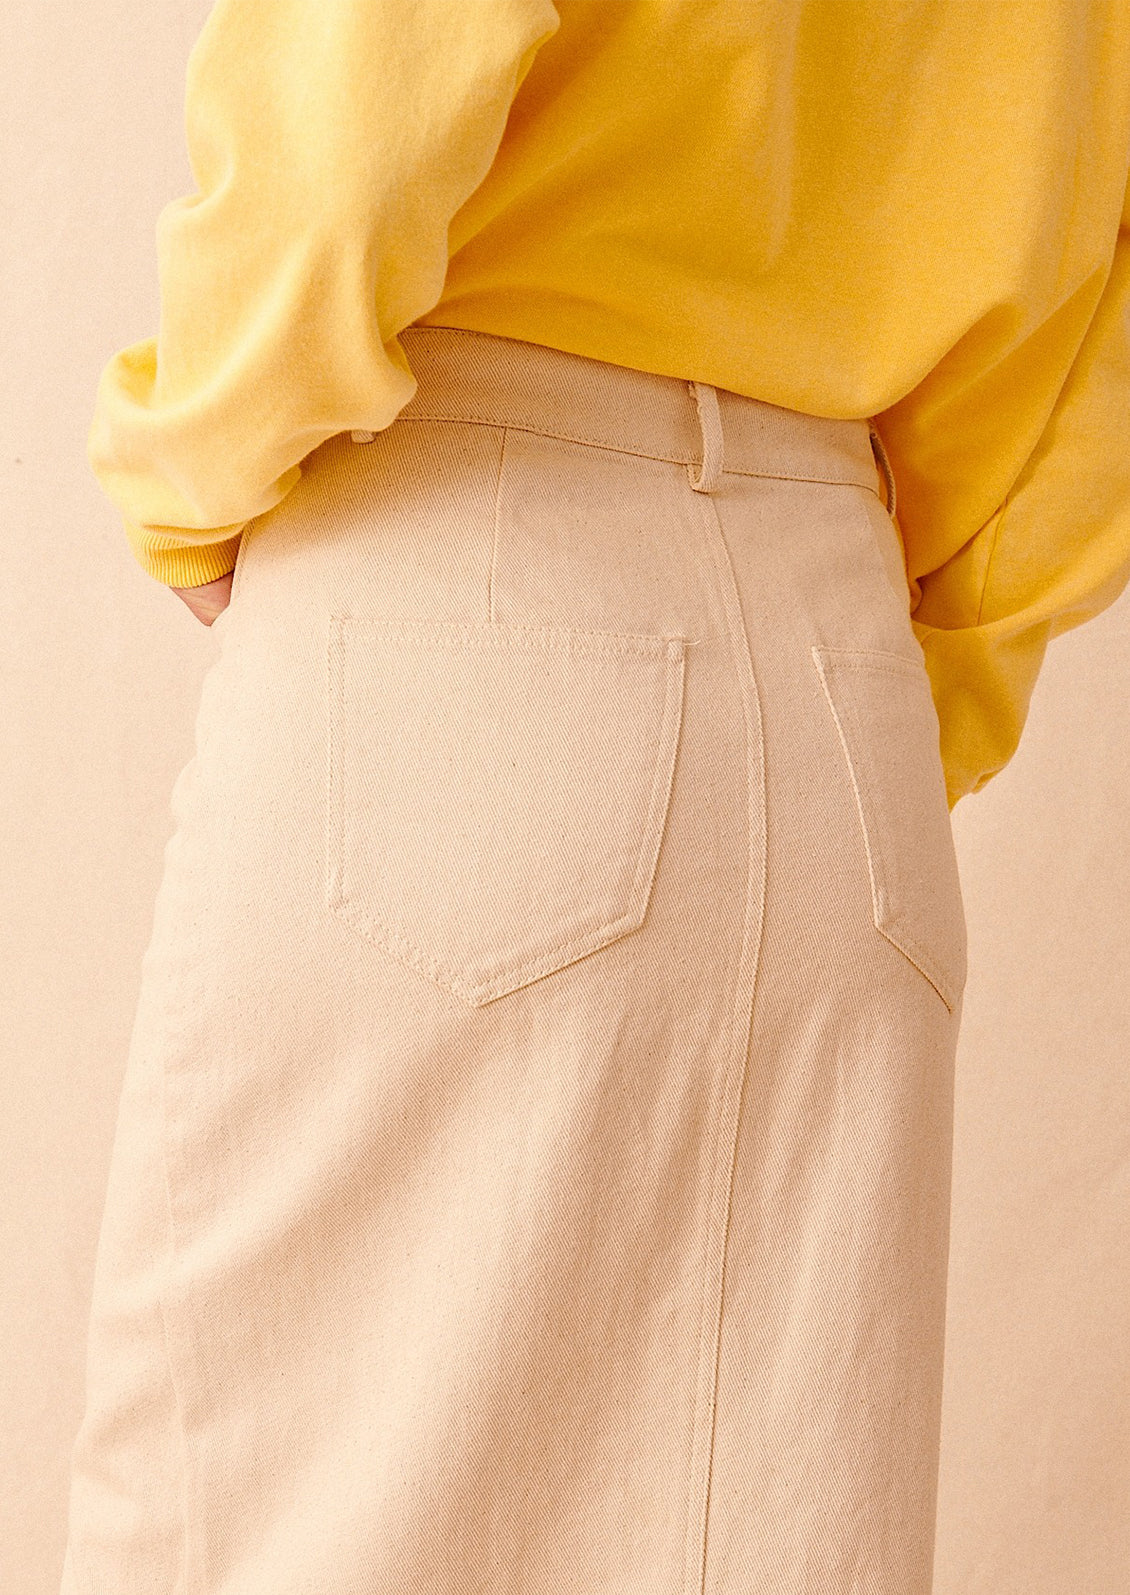 A person wearing a yellow sweatshirt tucked into an ecru denim skirt showing back pocket detail